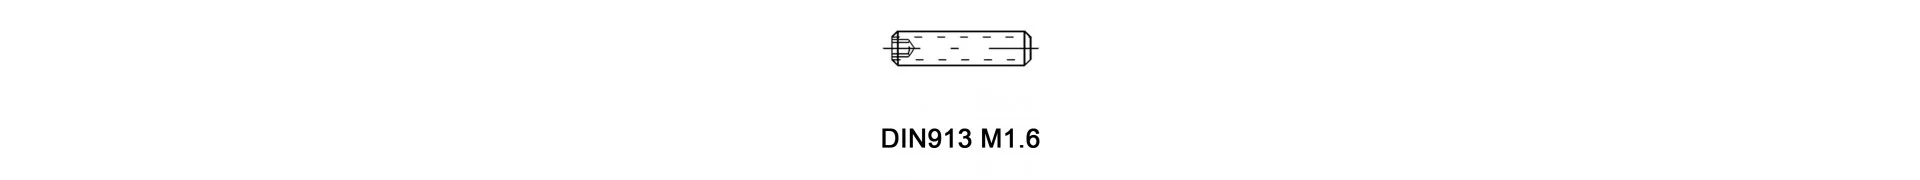 DIN913 M1.6